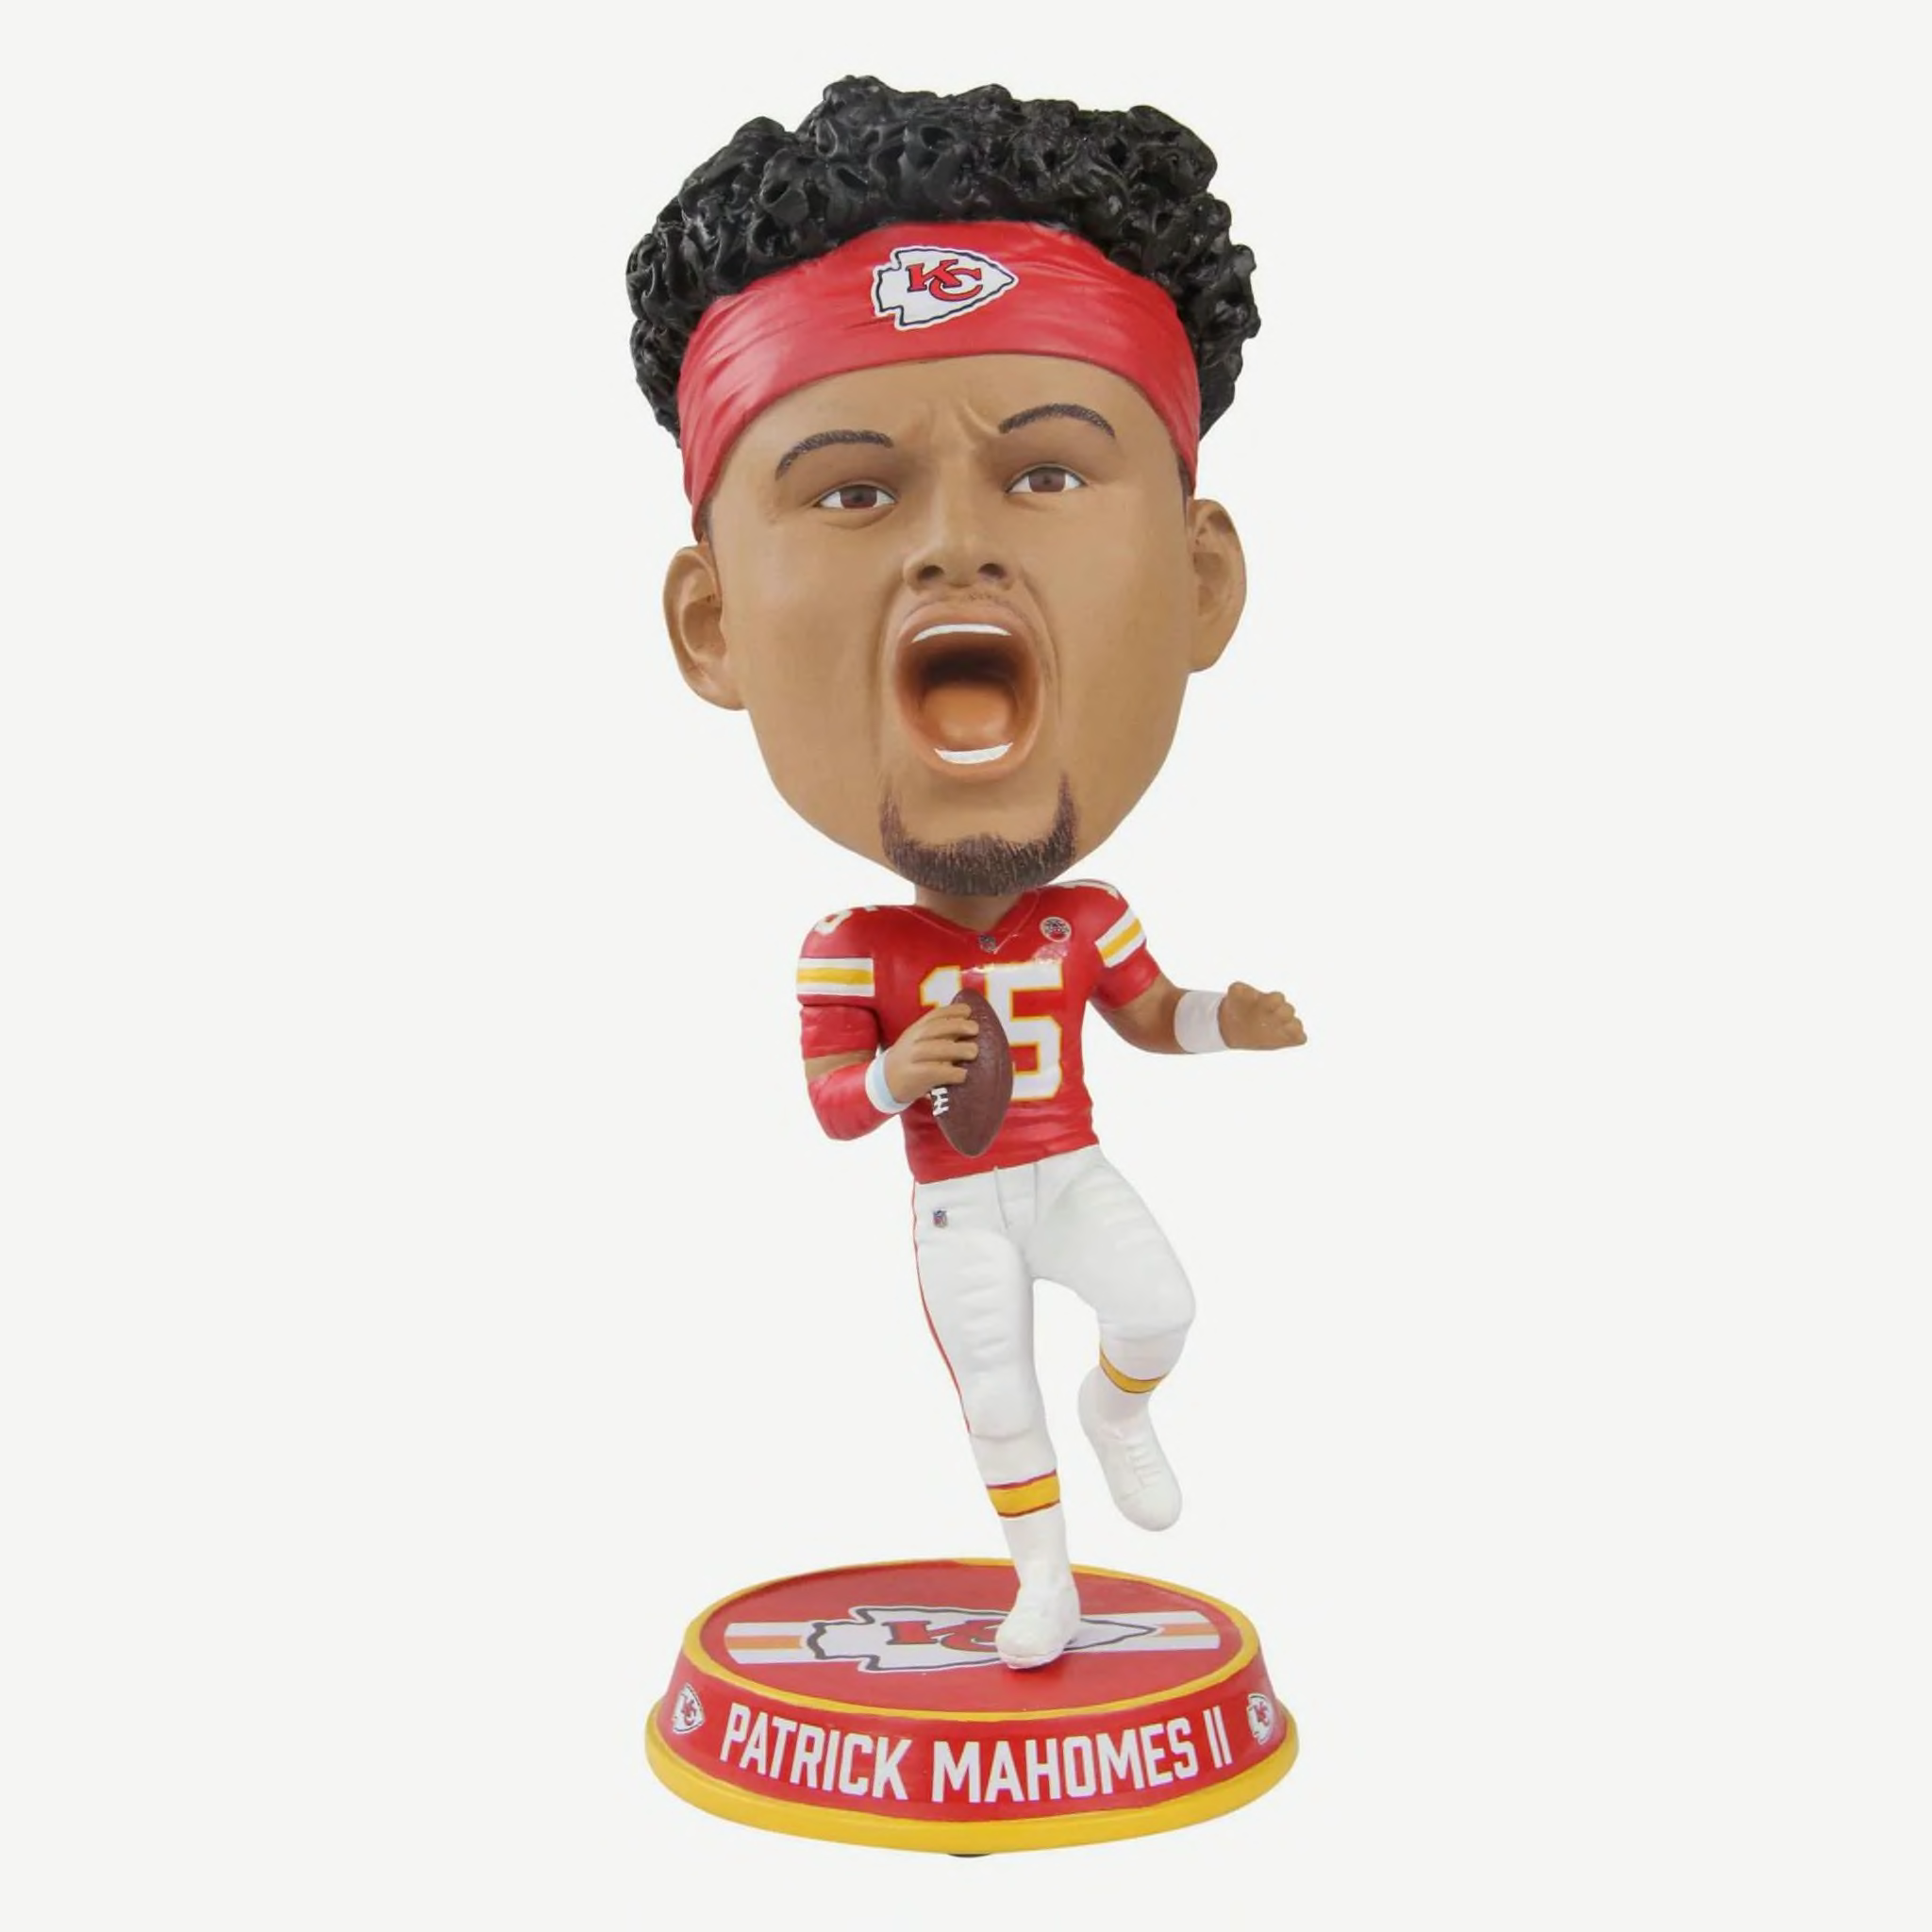 Kansas City Chiefs fans need this Patrick Mahomes bobblehead